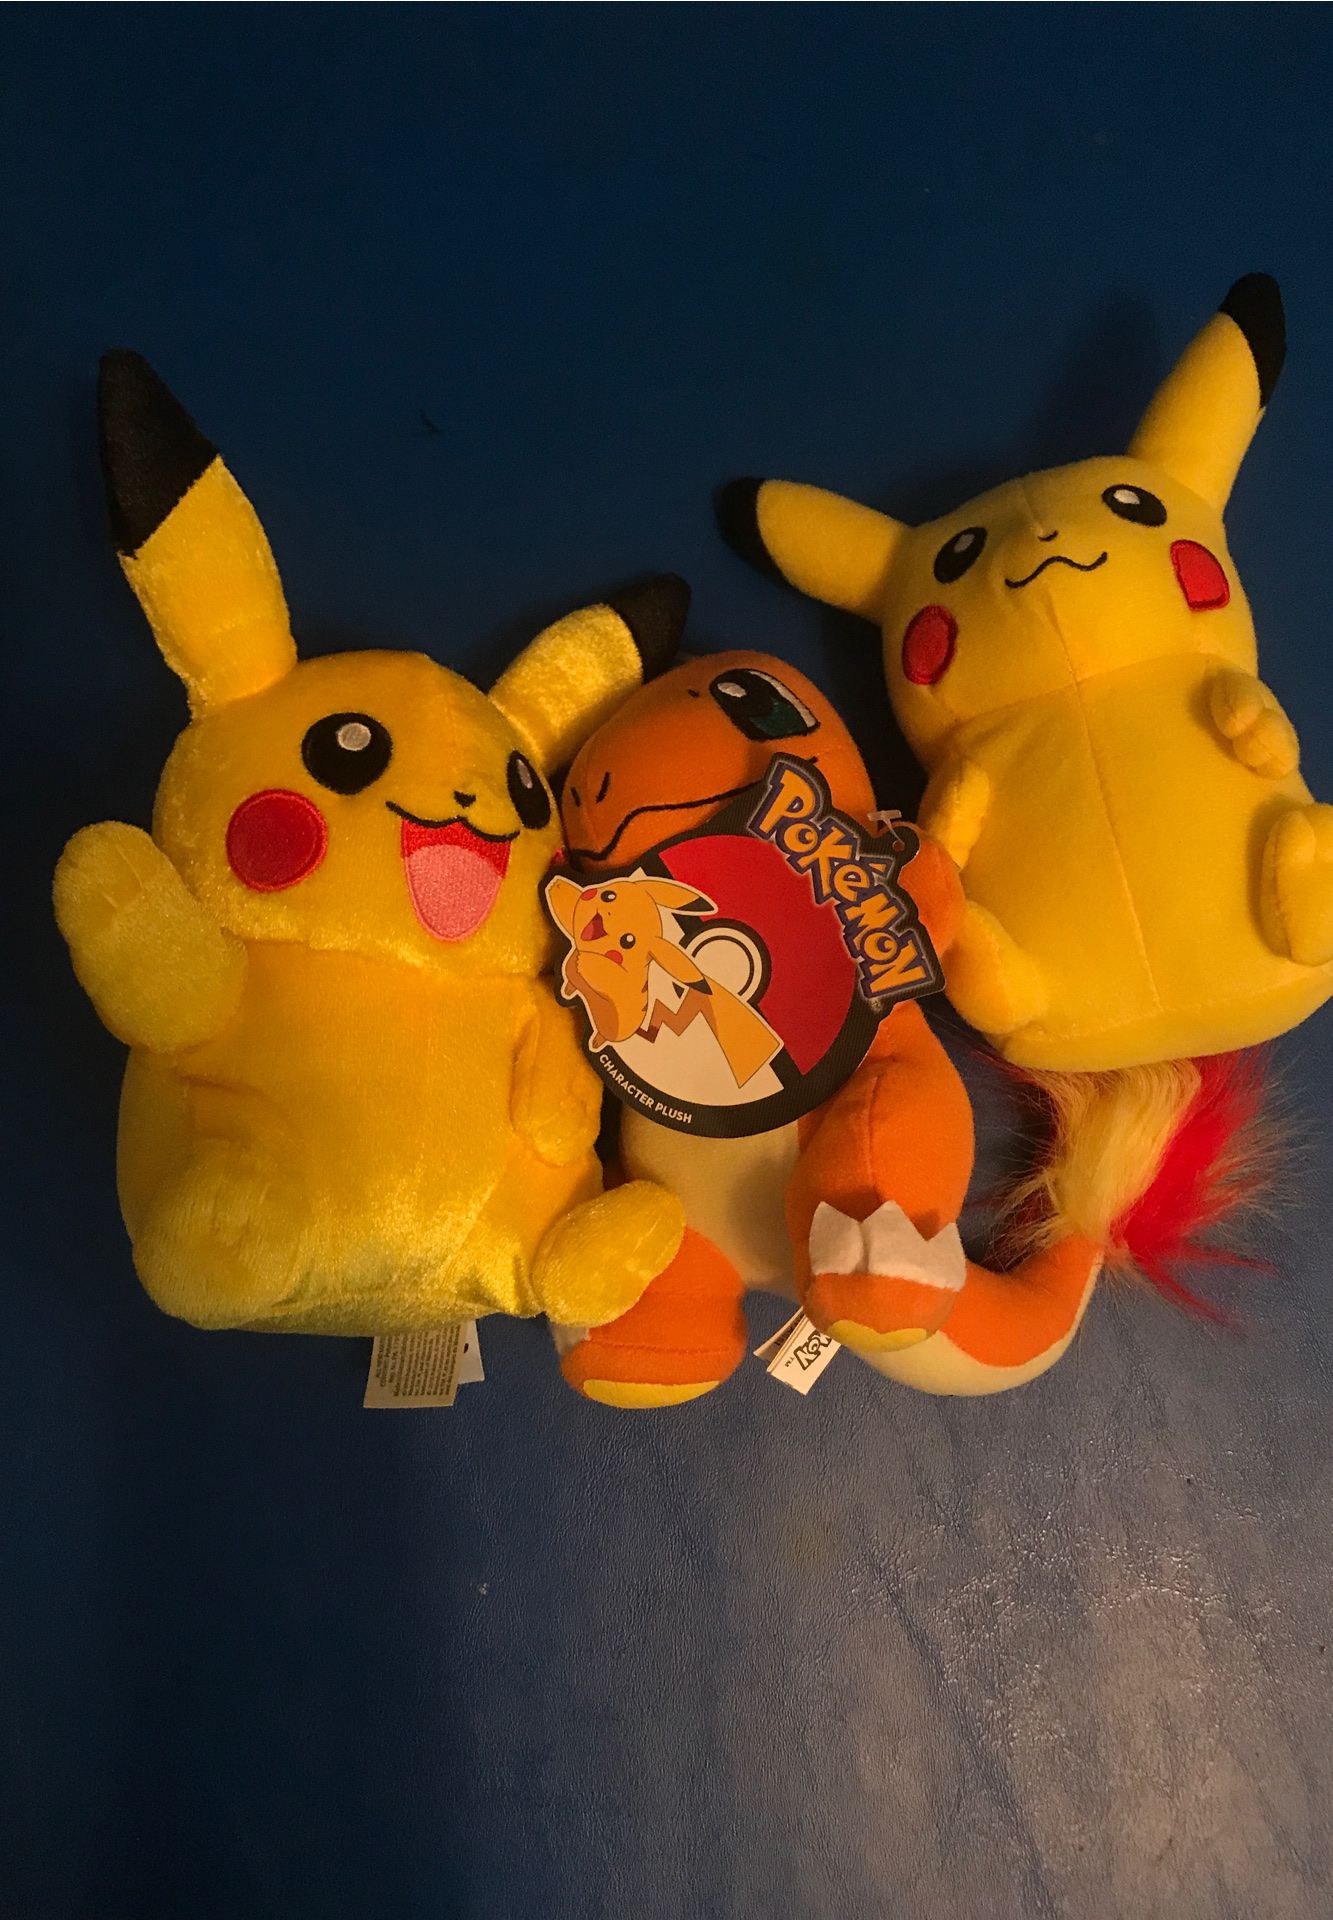 Three Pokémon stuffed animals